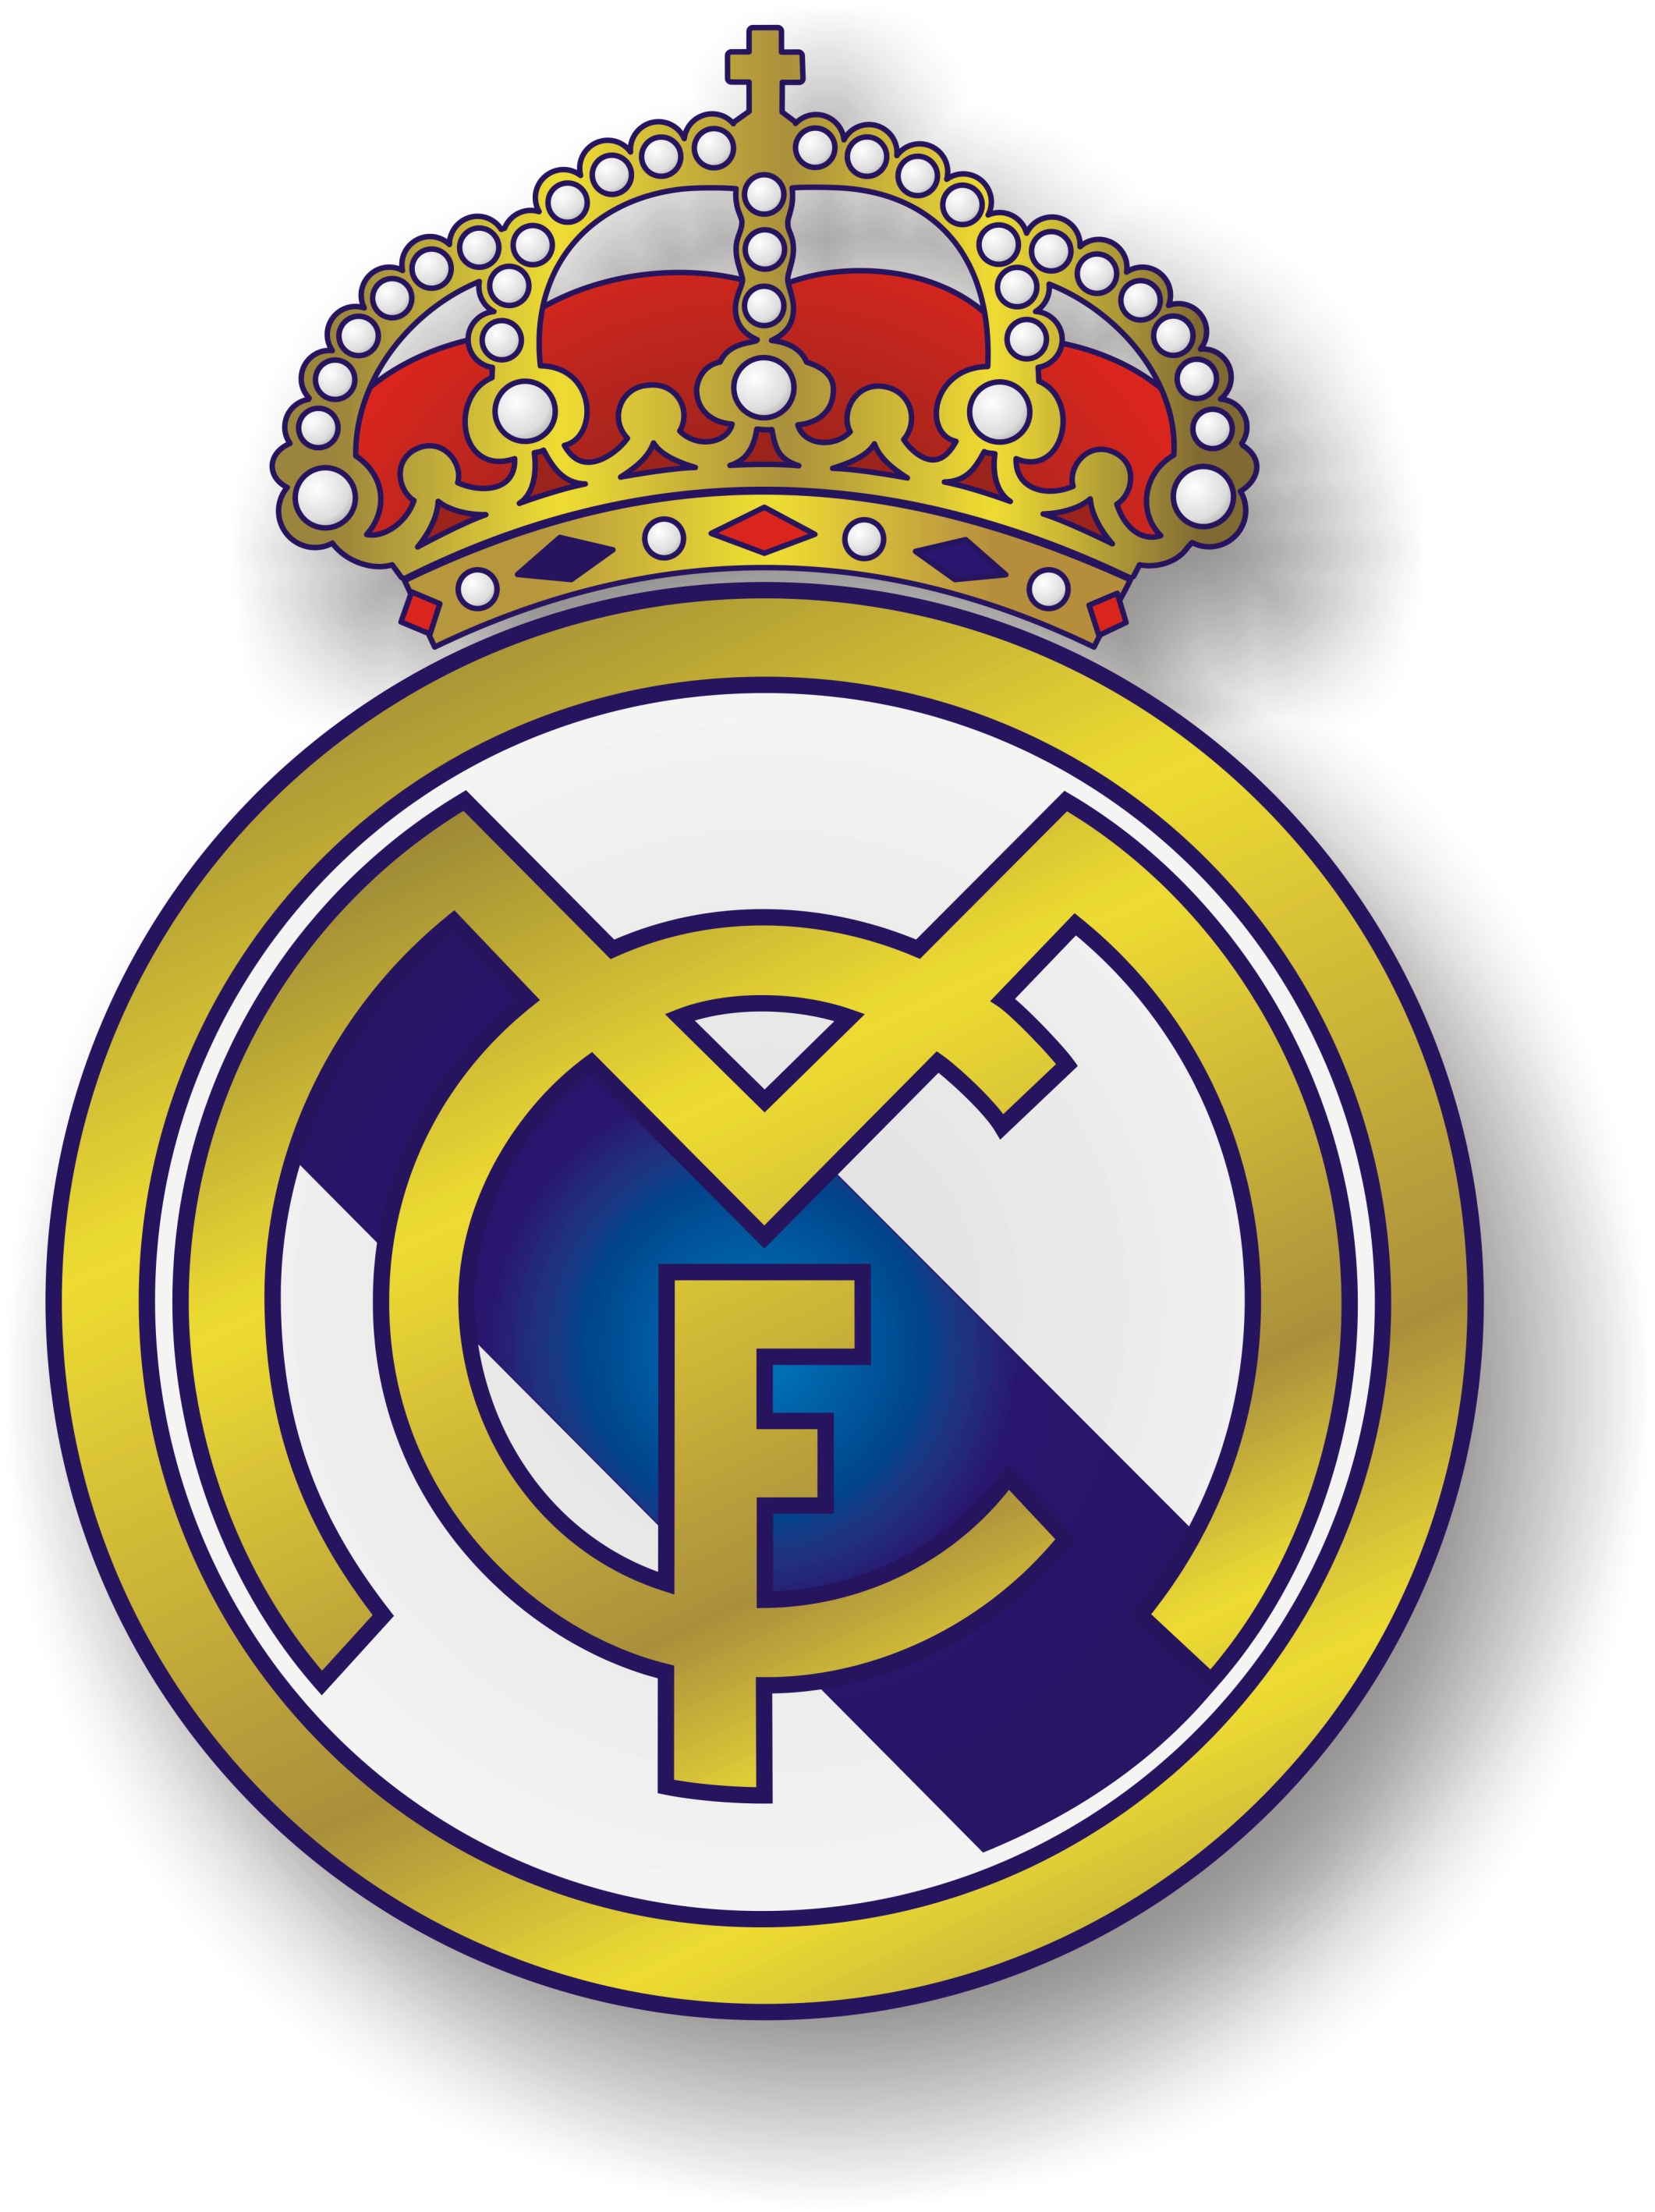 Società calcistica del Real Madrid